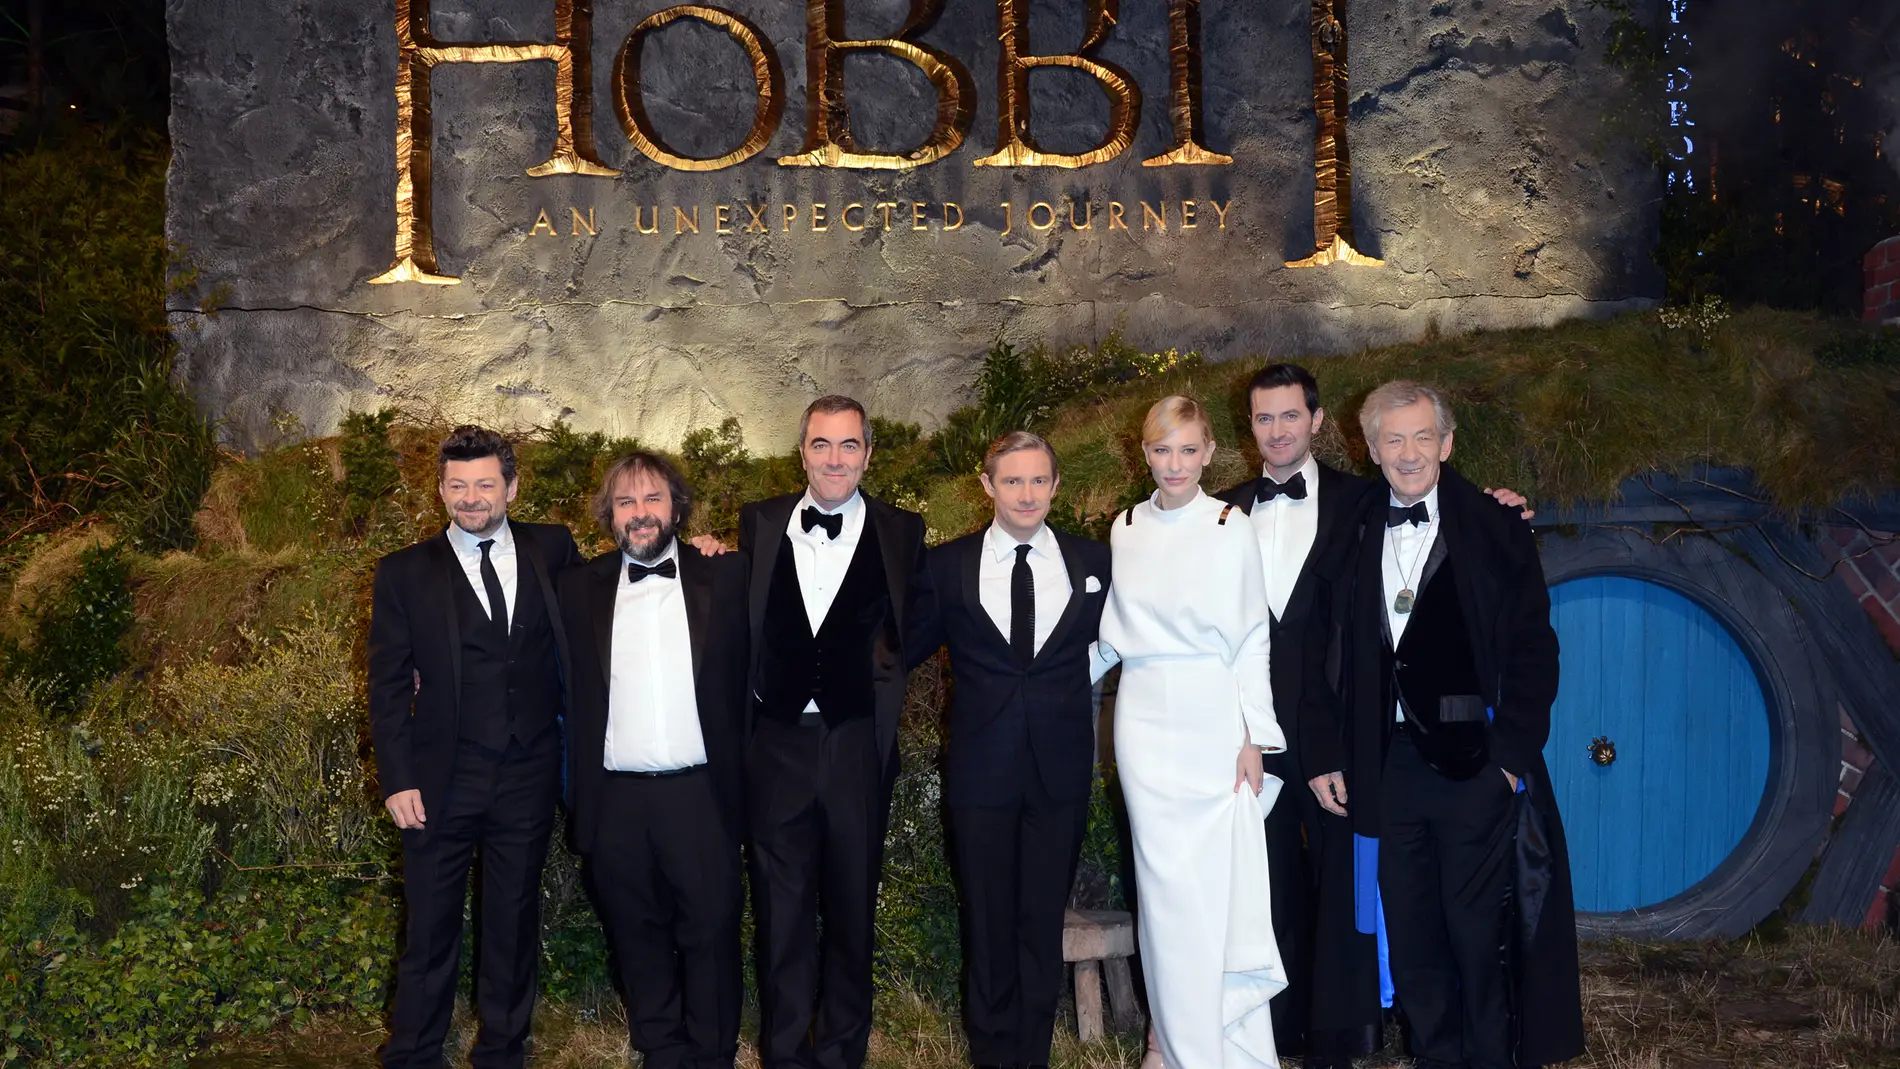 Premiere El Hobbit